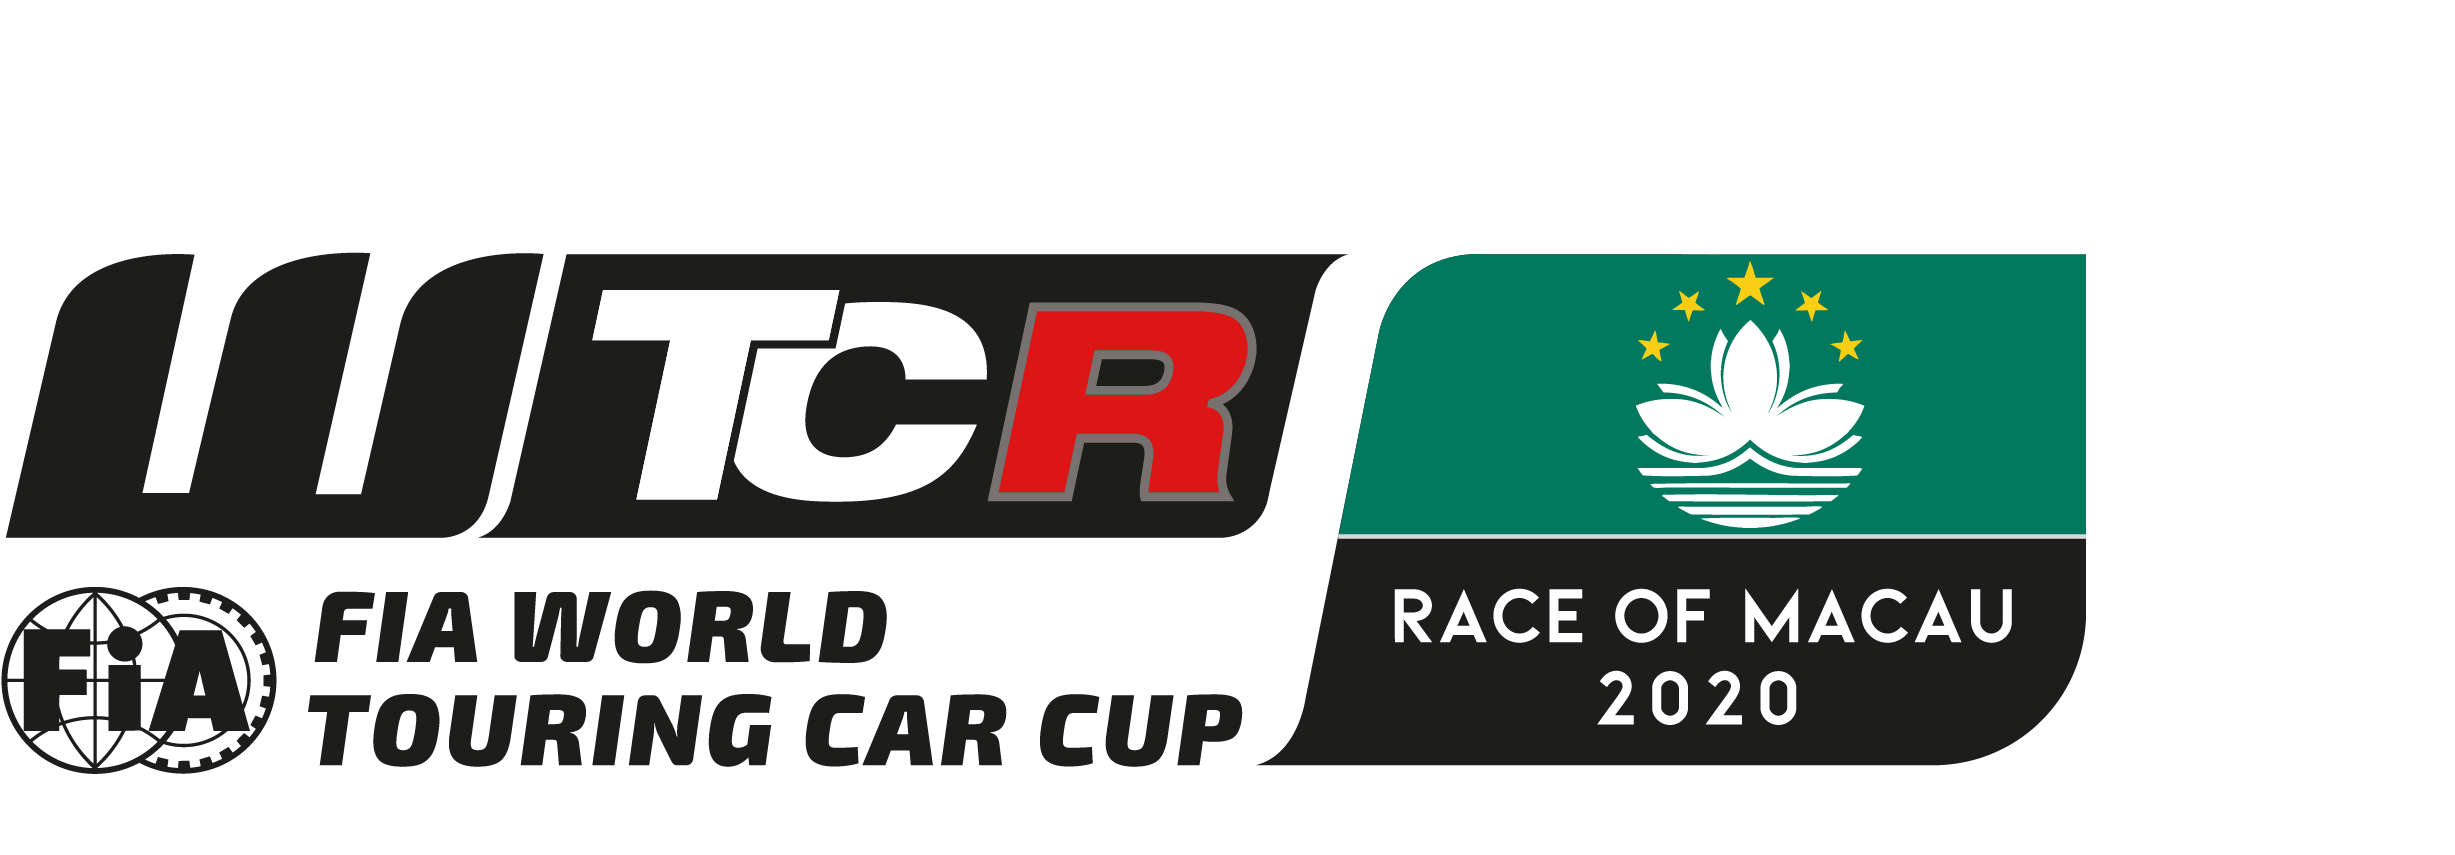 Race of Macau